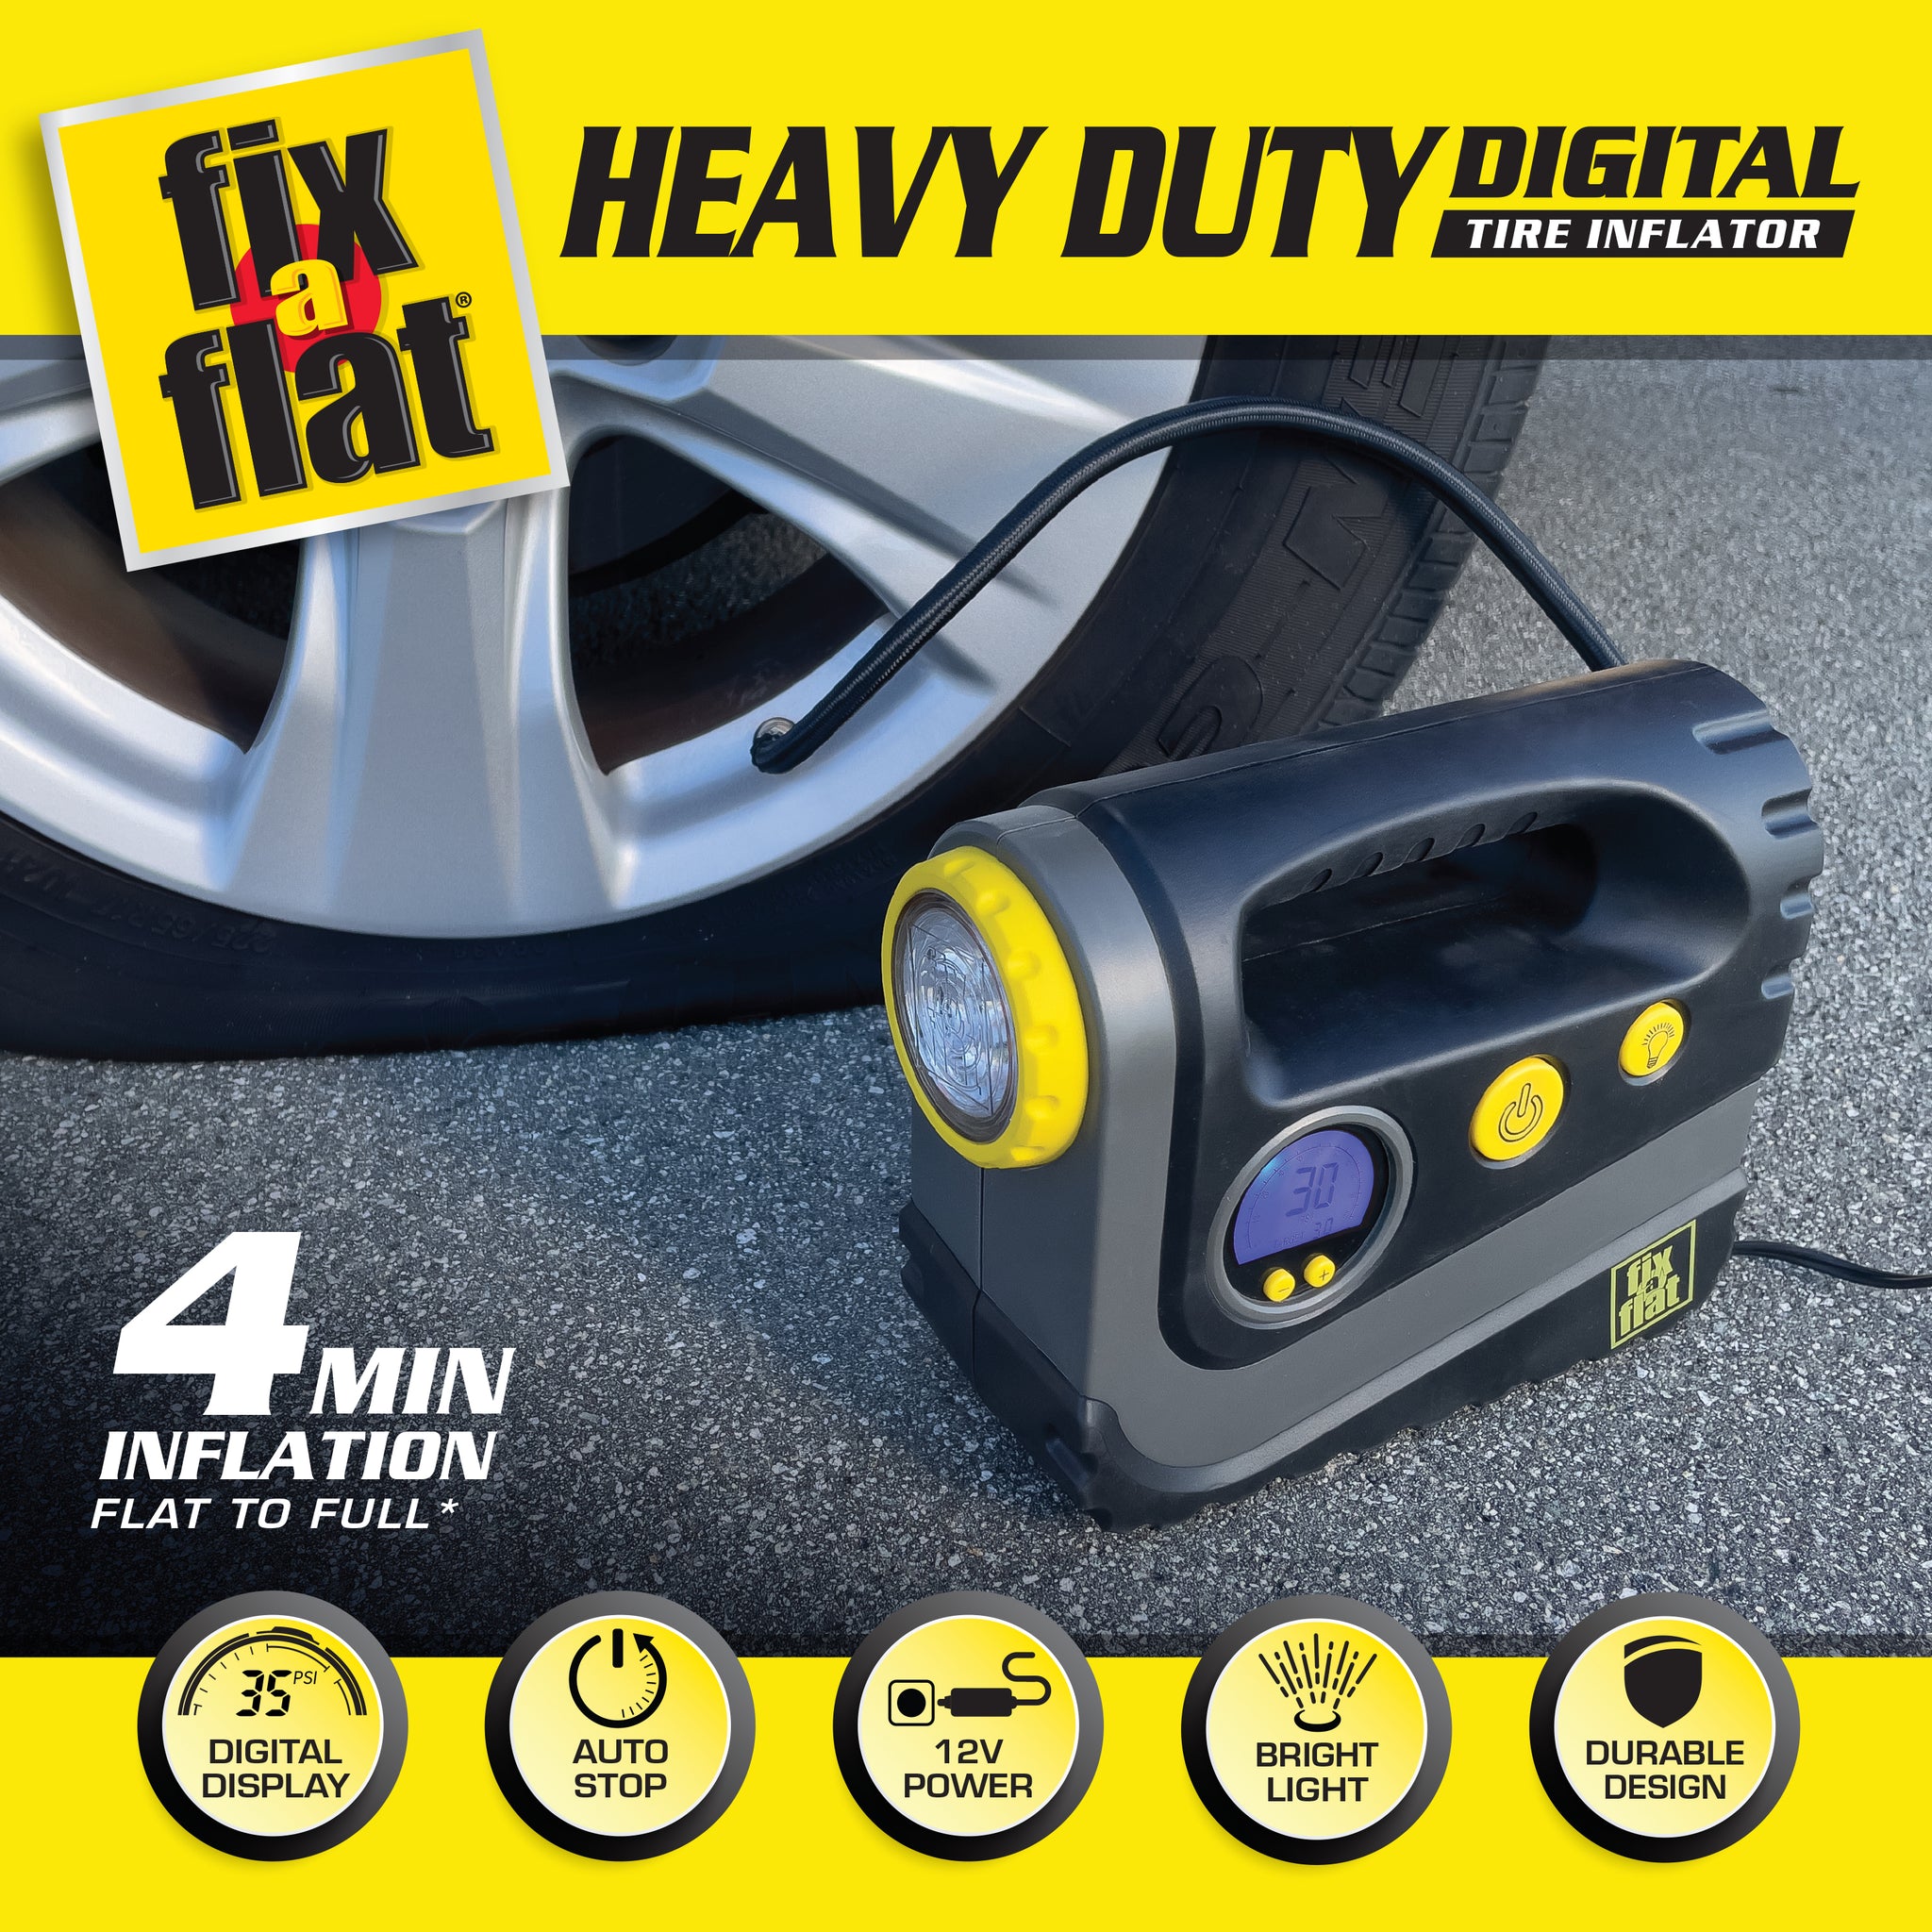 Heavy Duty Digital Tire Inflator